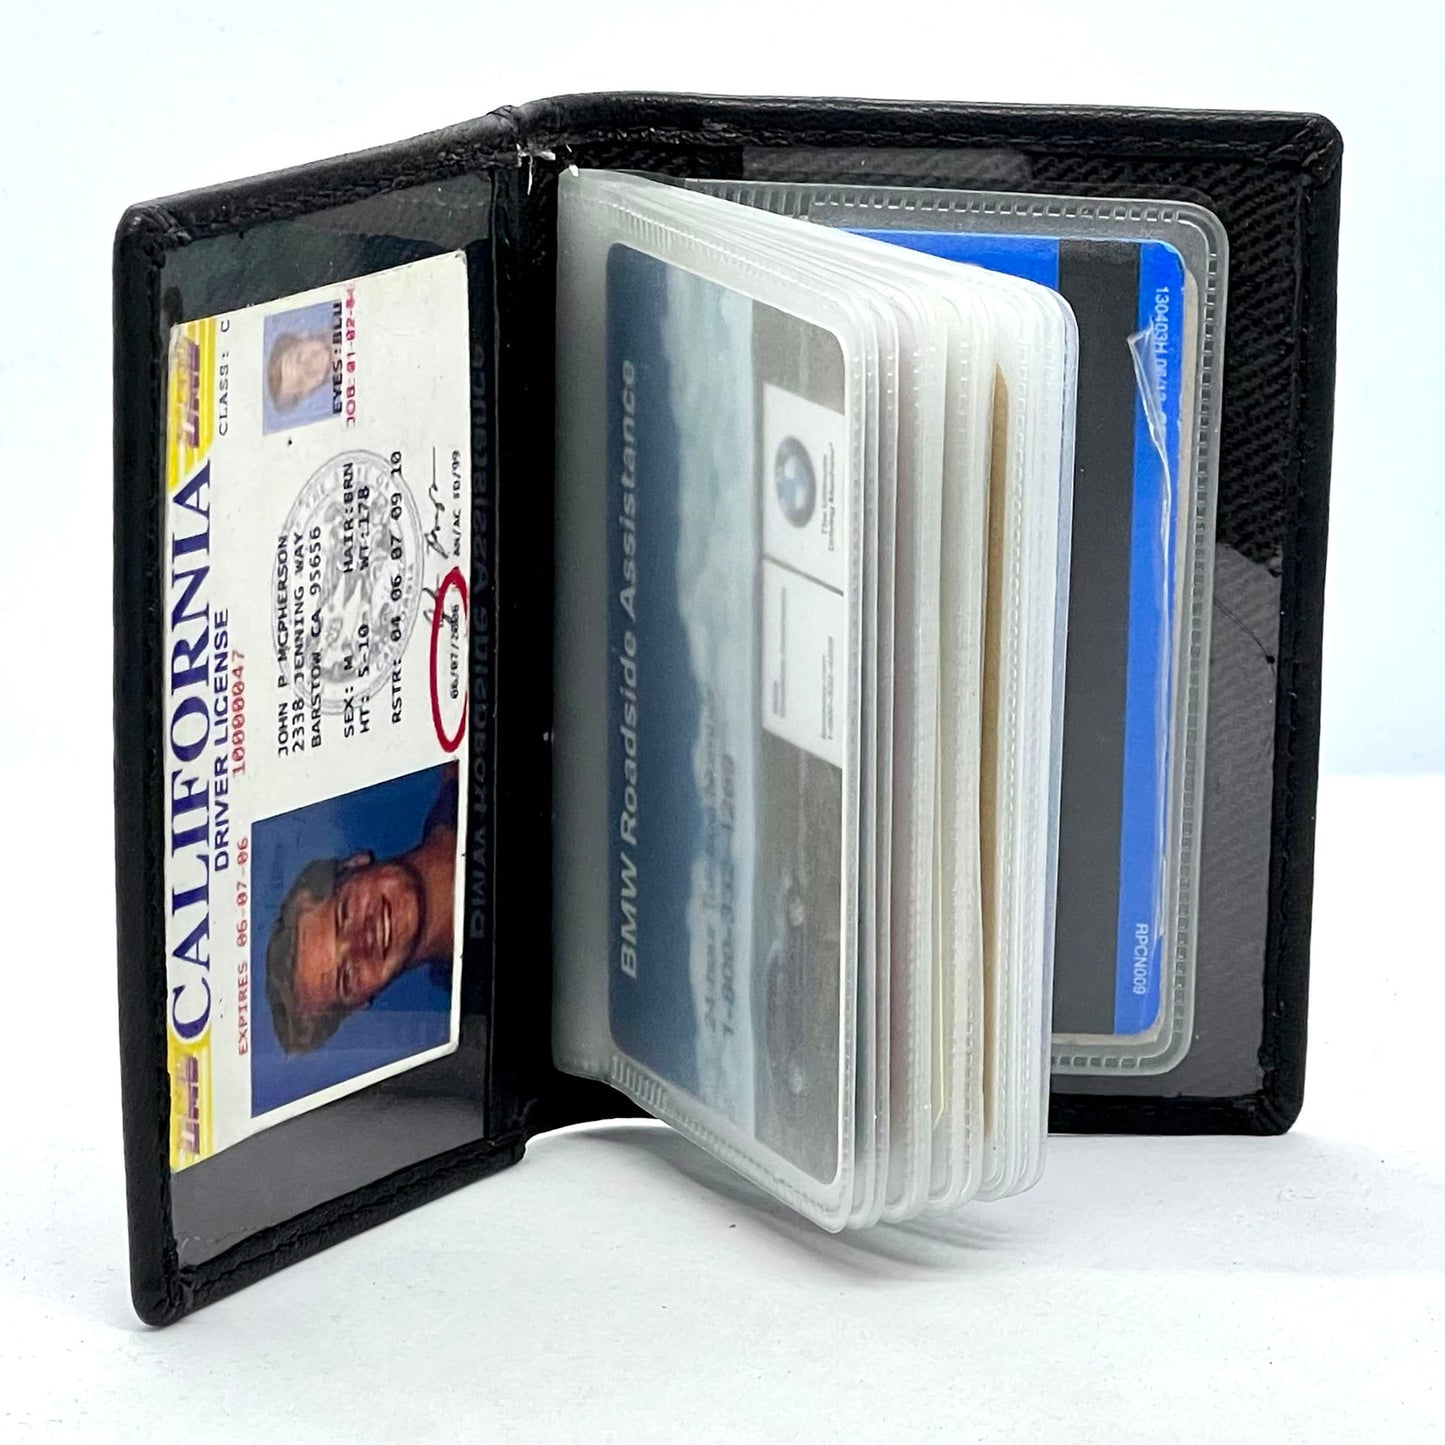 RFID Blocking Leather Business Credit Card Wallet Pocket Organizer 18 Insert